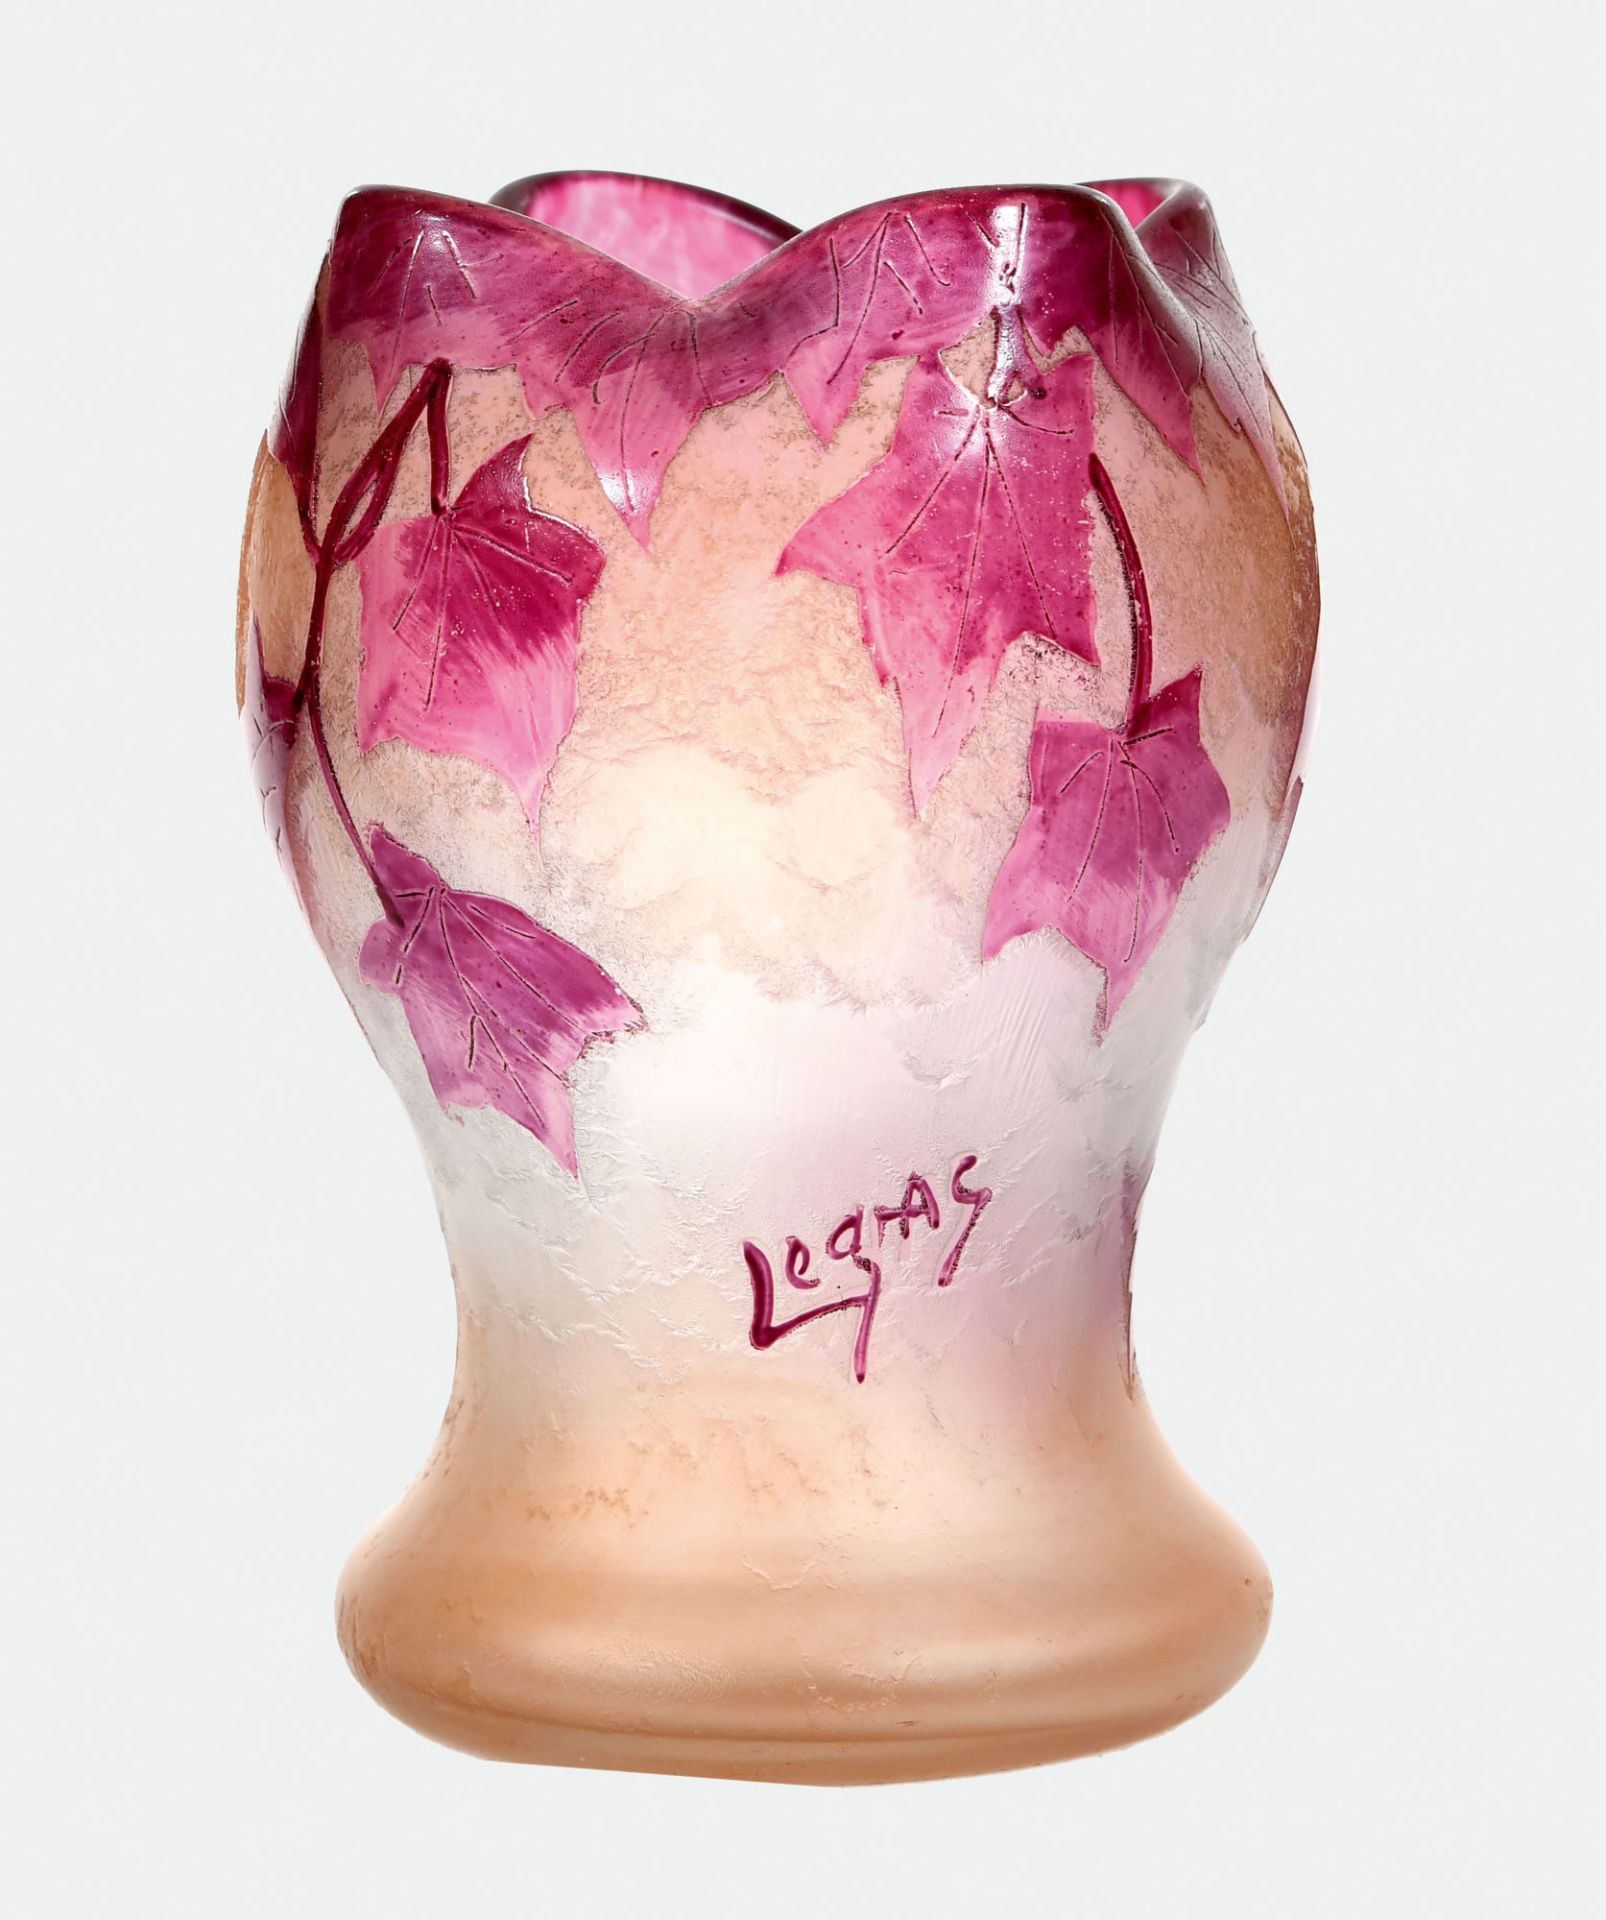 LEGRAS, AUGUSTE JEAN FRANÇOIS: Vase, St. Denis, um 1910-1915.